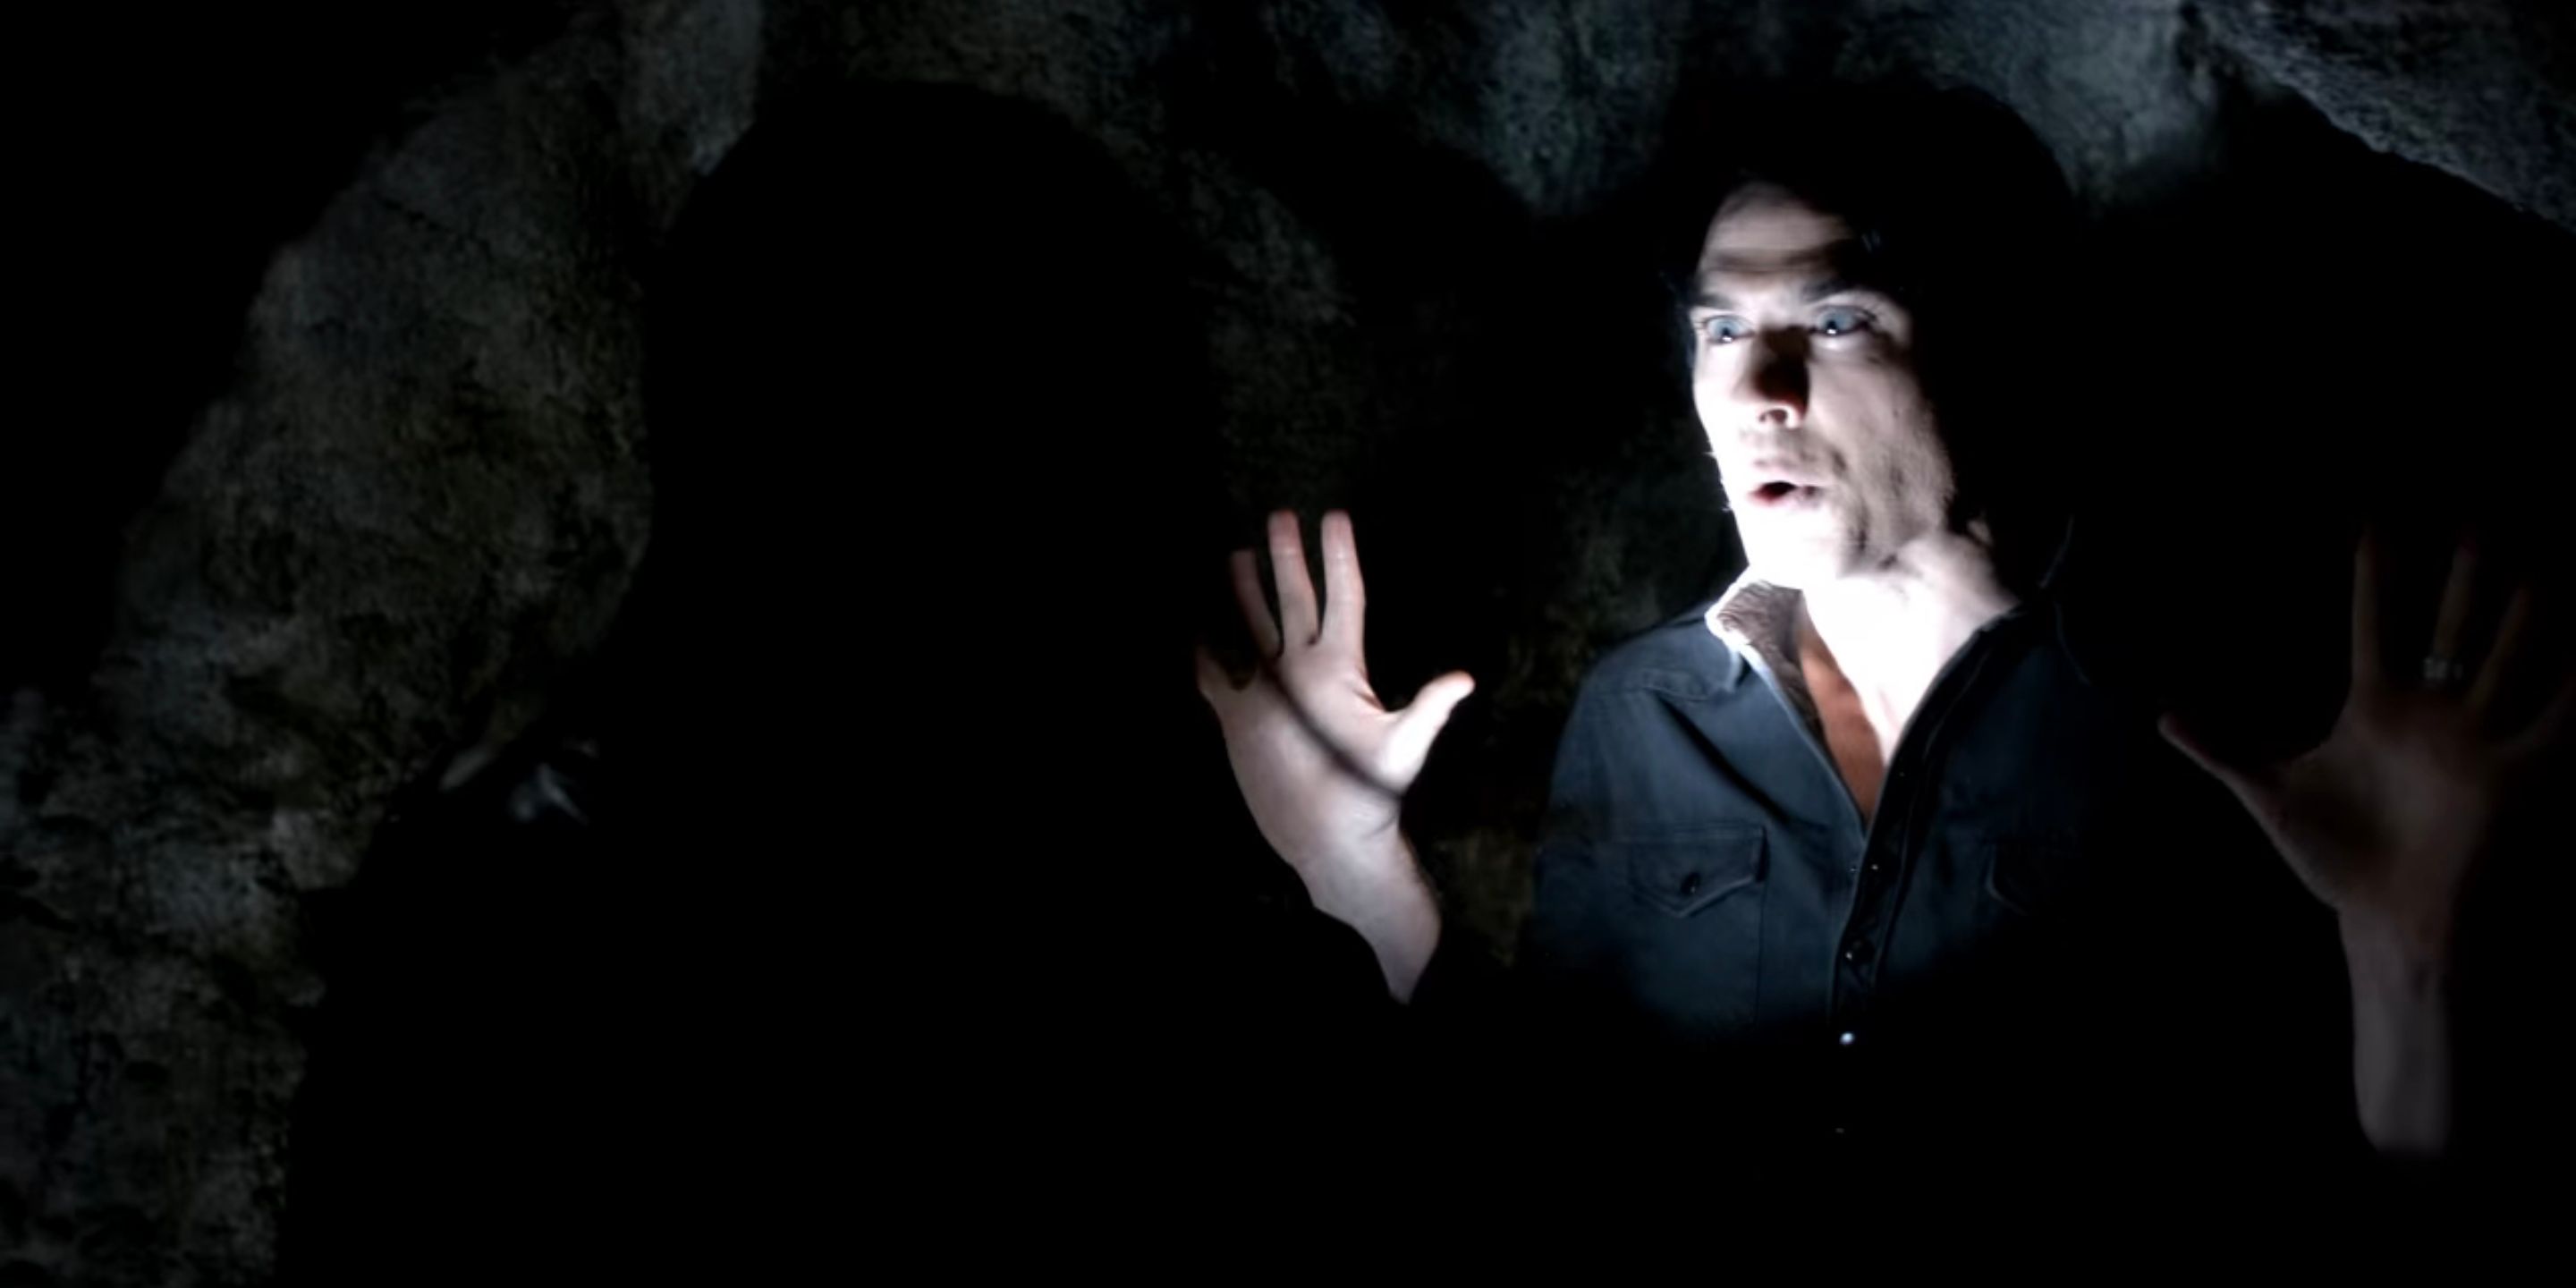 Damon assustando Elena em The Vampire Diaries.